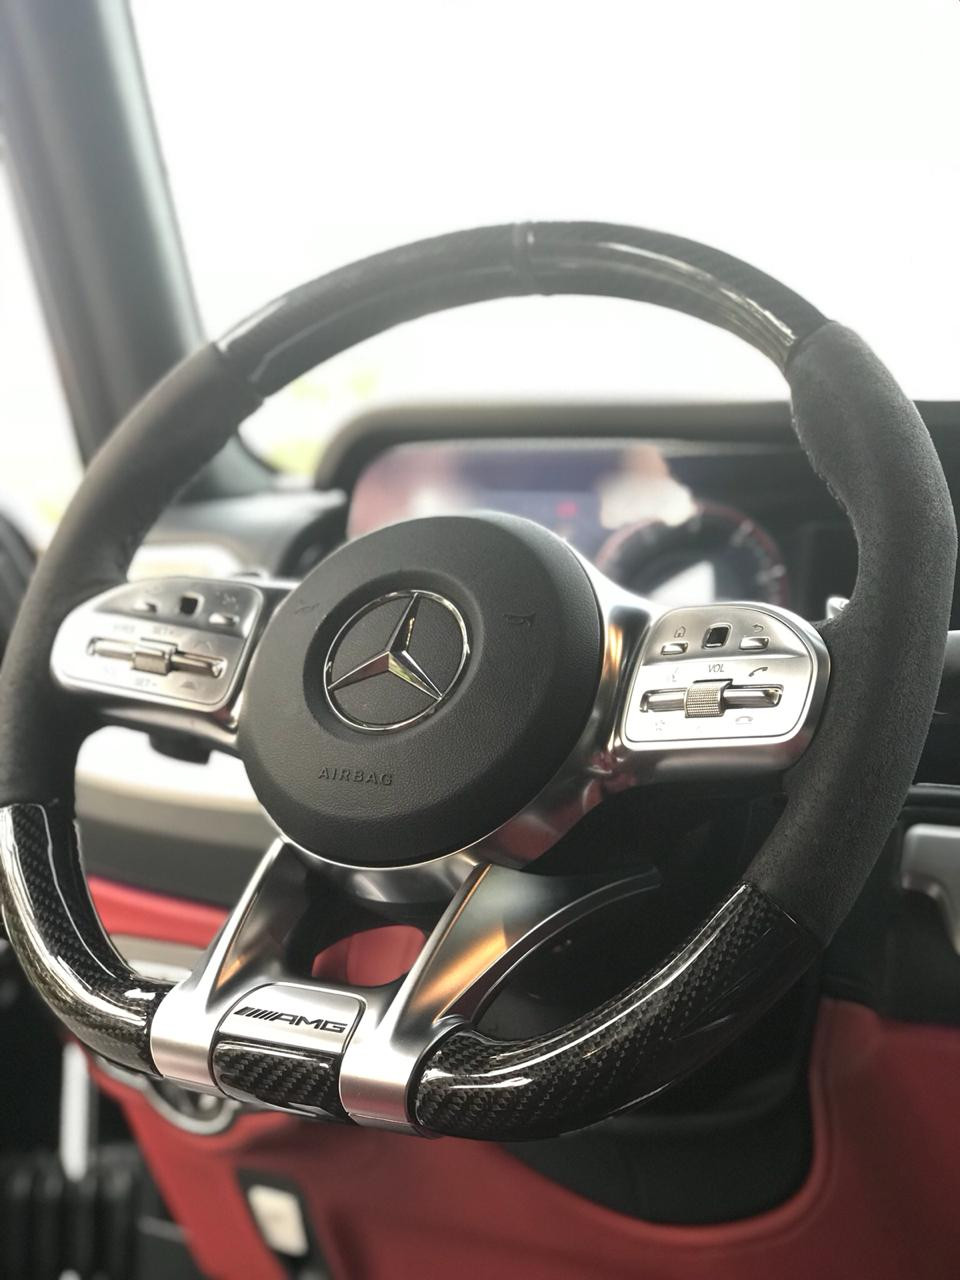 Black Mercedes Benz AMG G63 2019